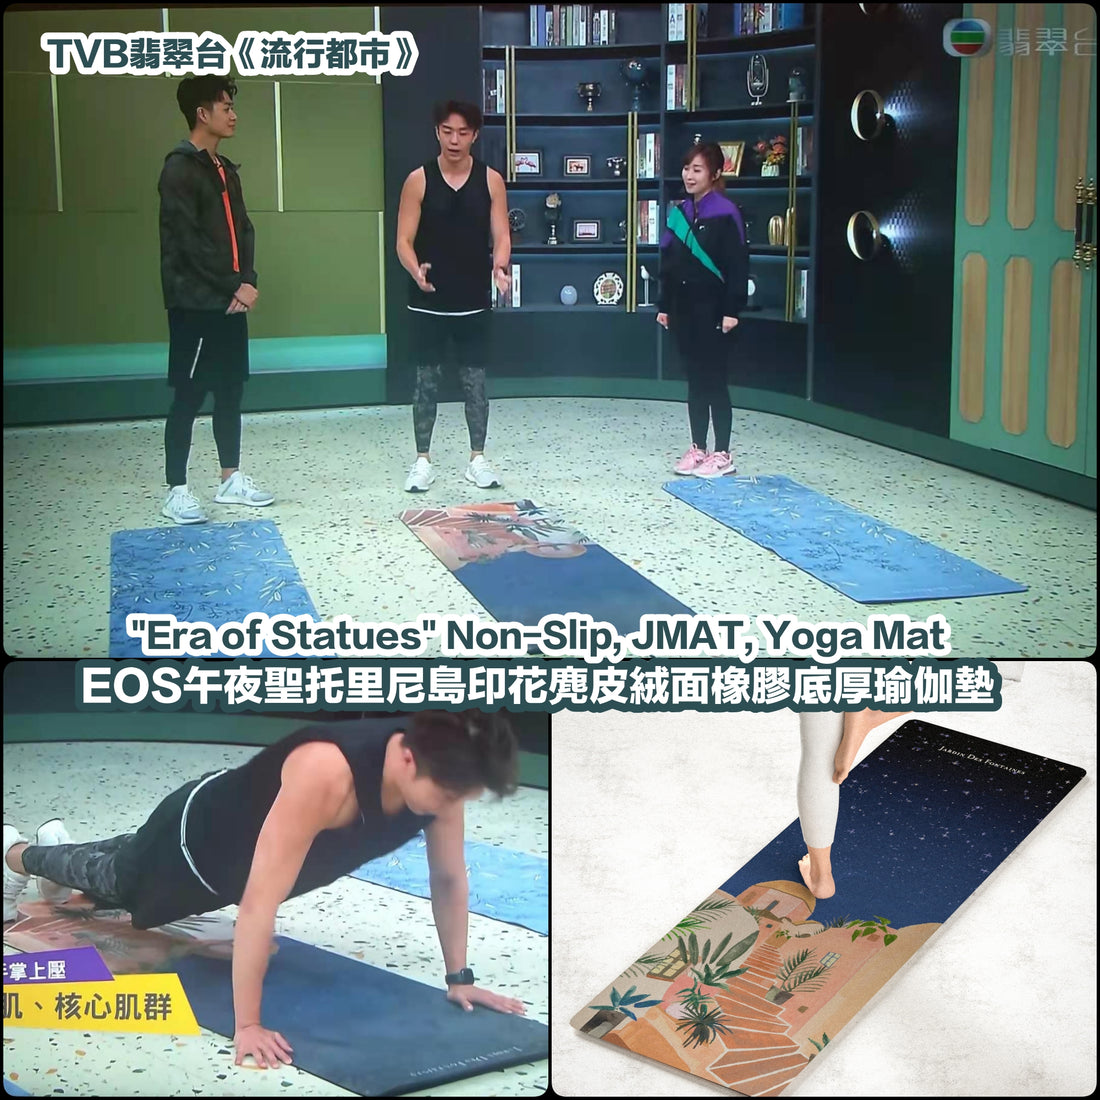 "Era of Statues" JMAT Non-slip yoga mat debuts in TVB Jade Channel "Big City Shop" - JARDIN DES FONTAINES